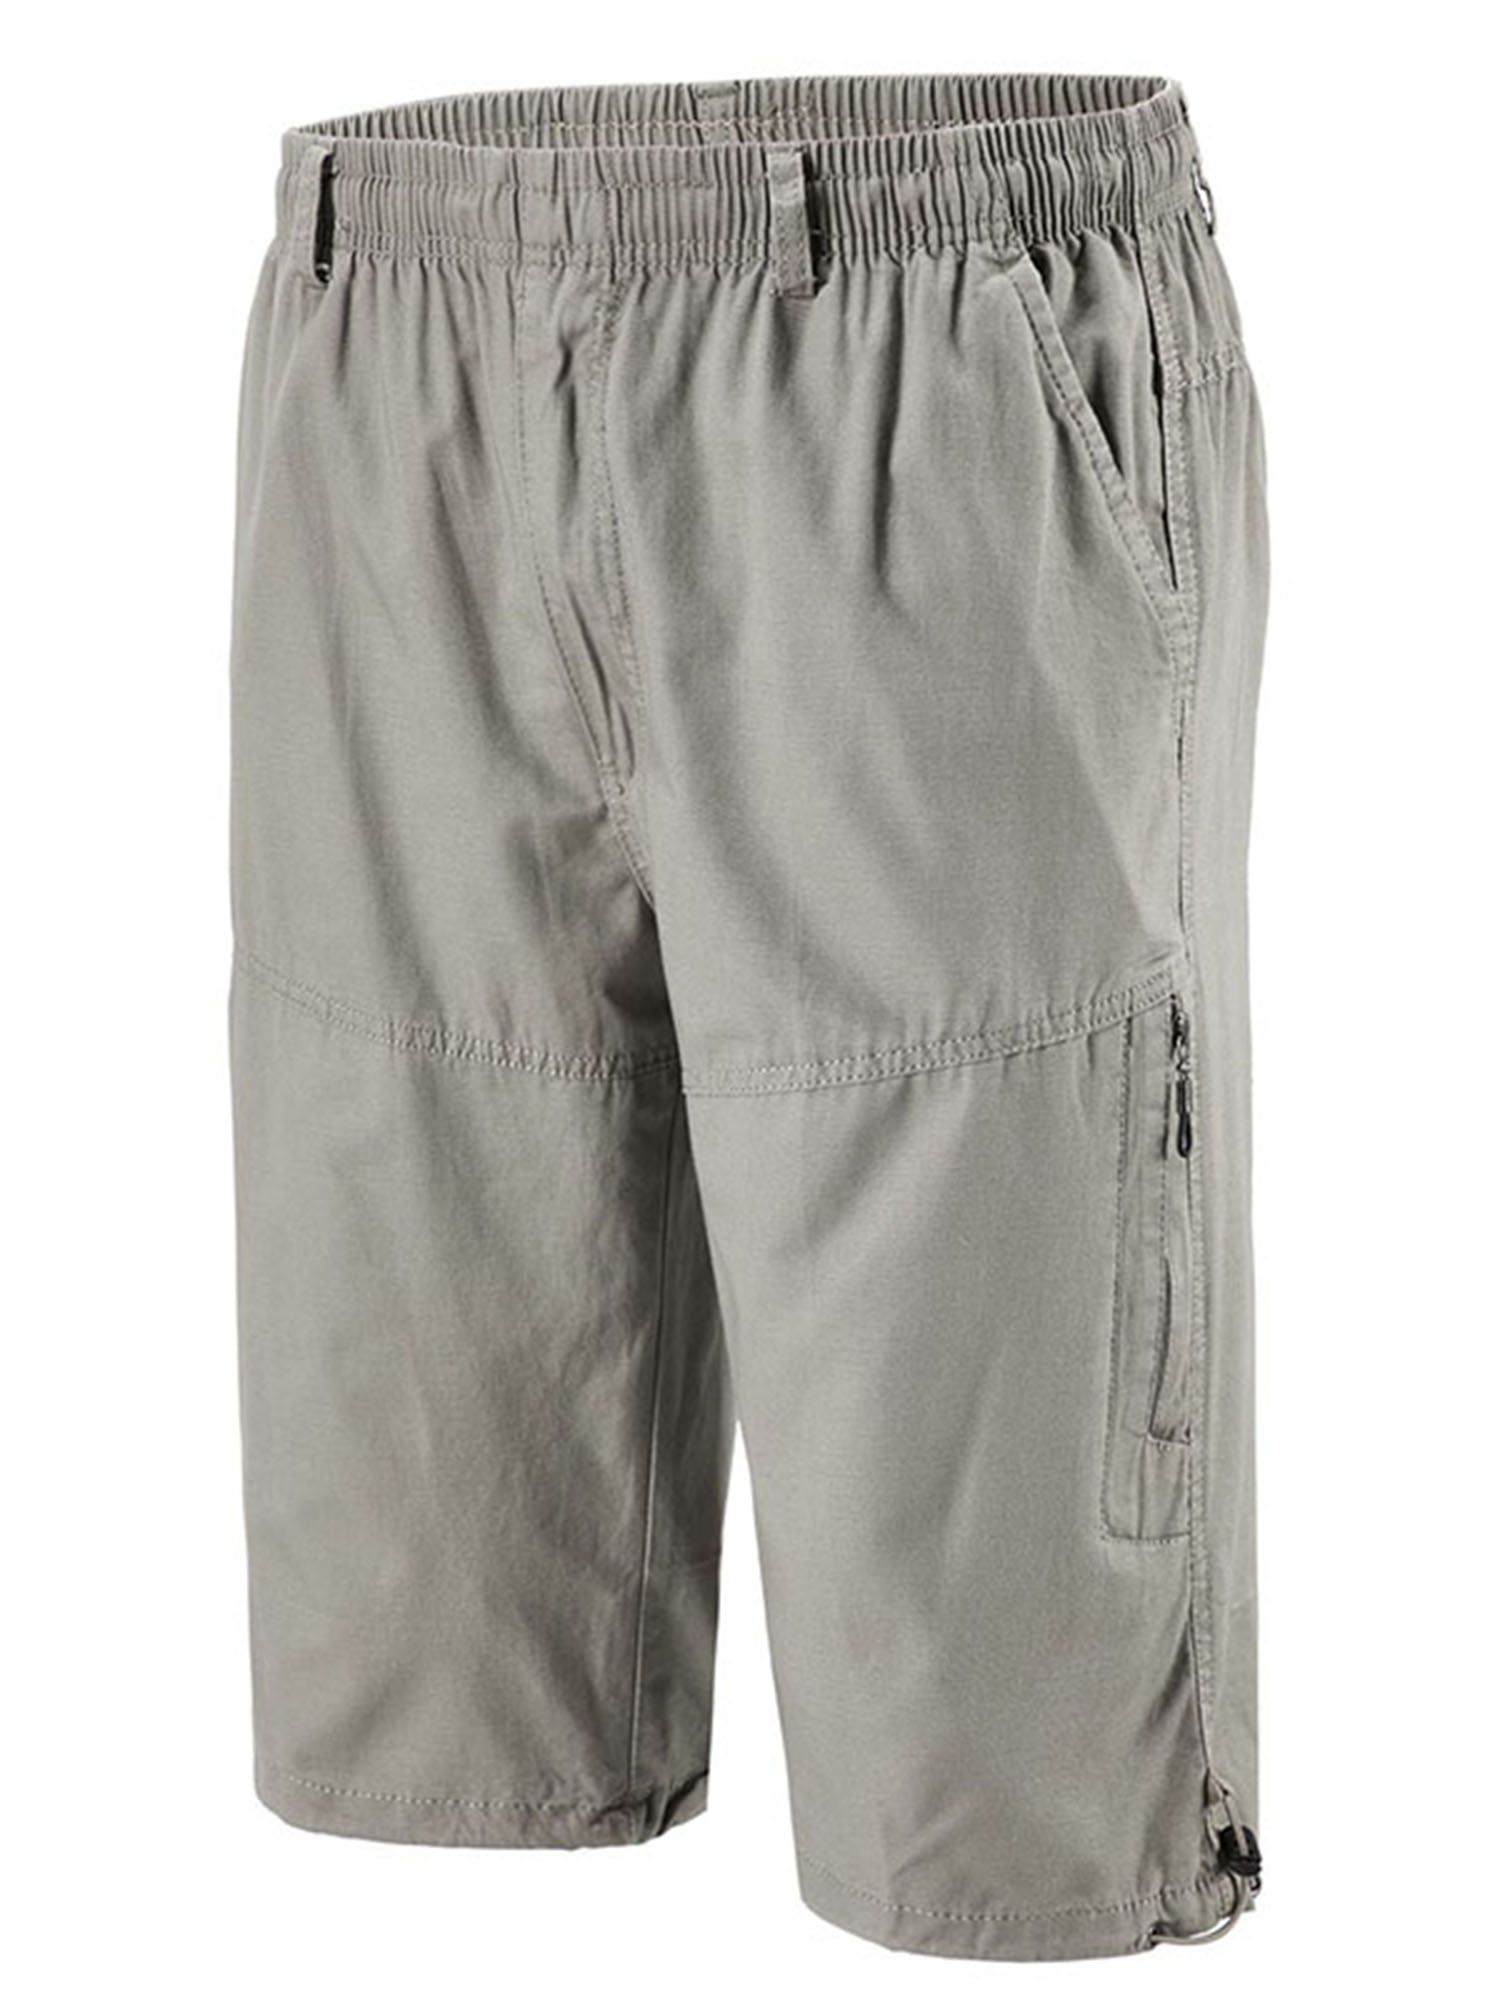 Big Boys Casual Shorts Summer Cotton Fit Drawstring Elastic Waist Beach Shorts with Zipper Pockets